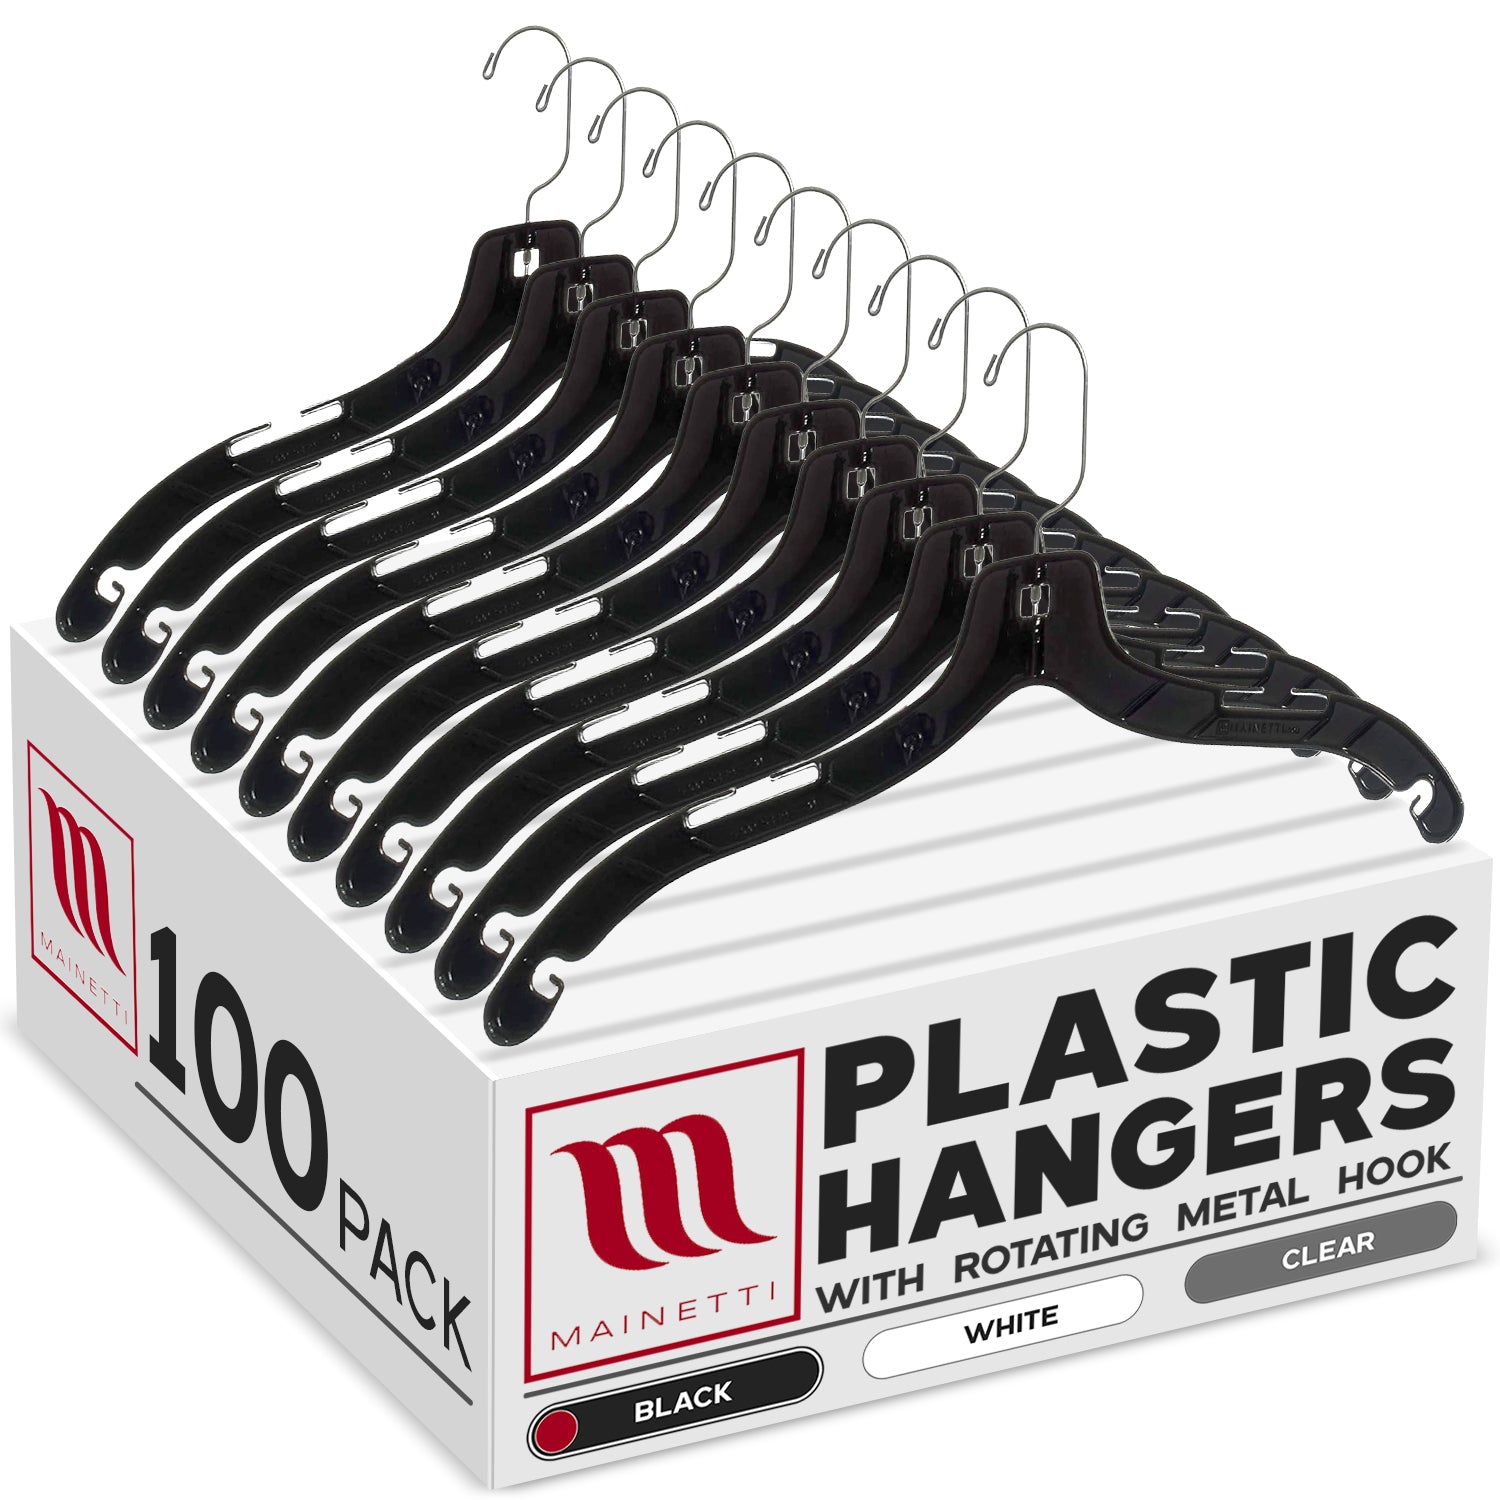 Mainetti 5400, 17 Black Plastic, Shirt Top Dress Hangers, with 360 sw -  Mainetti USA